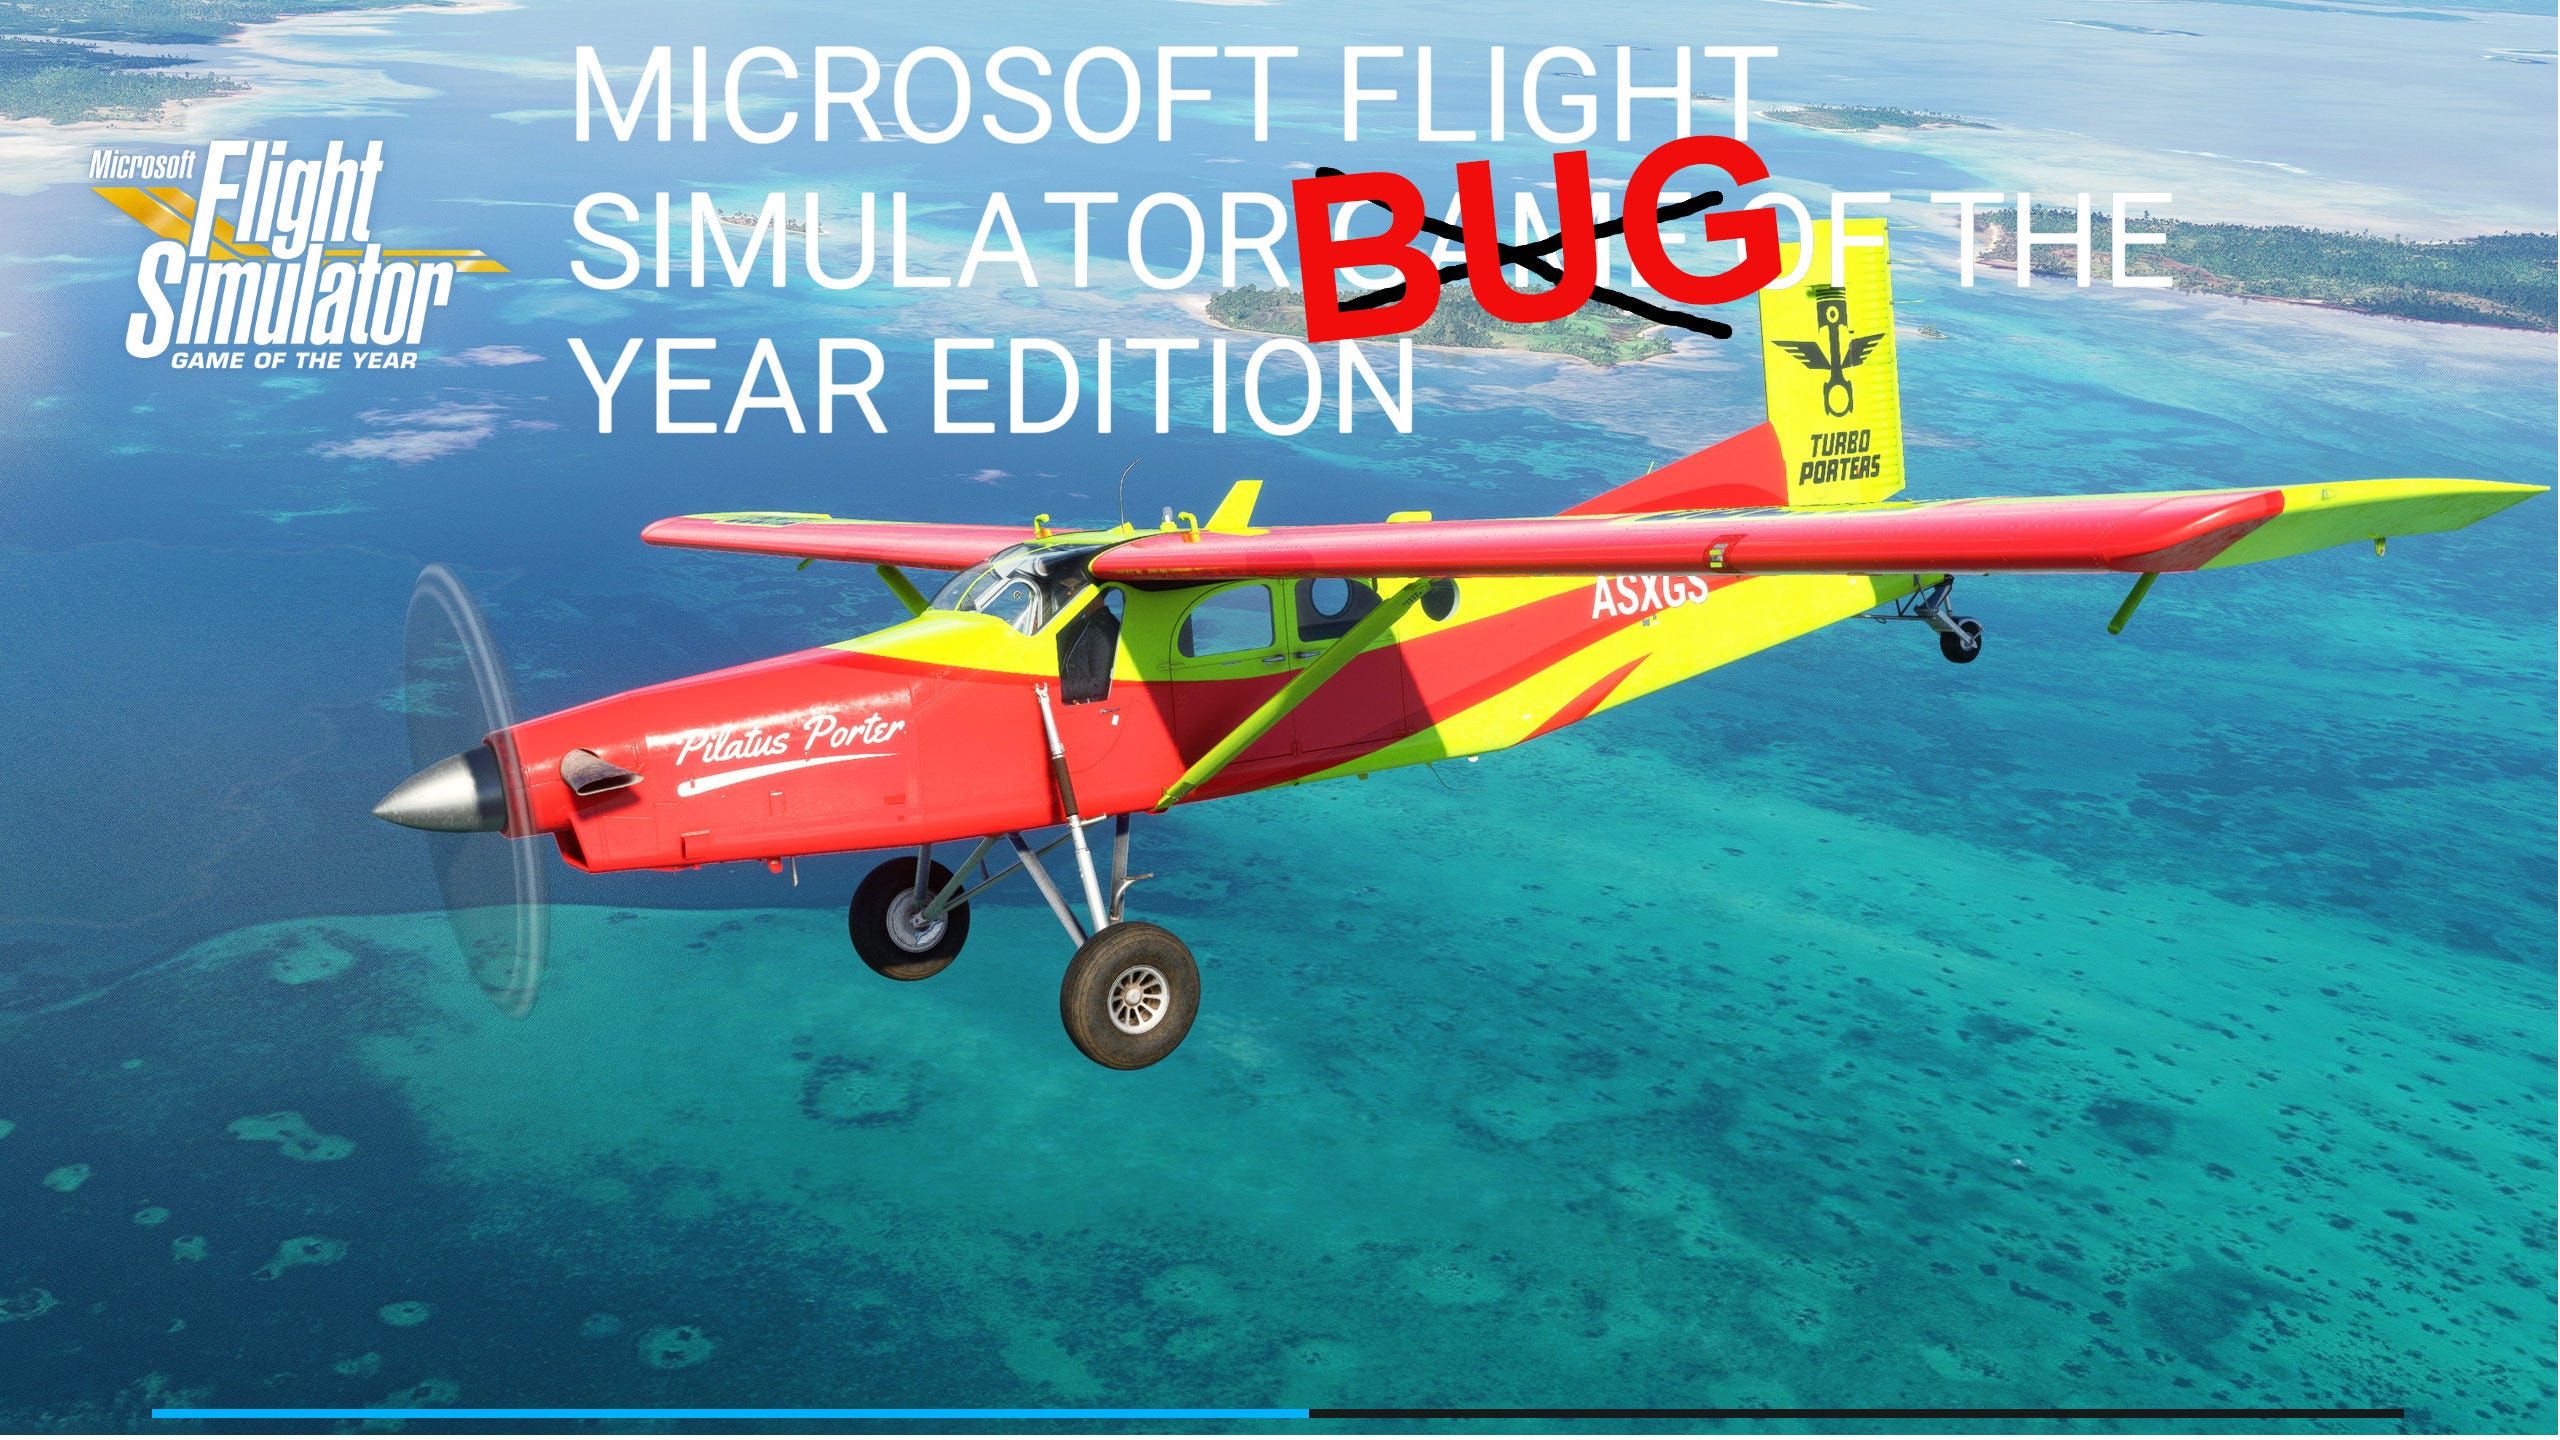 Microsoft Flight Simulator X returns home, by Jose Antunes, Outpost2